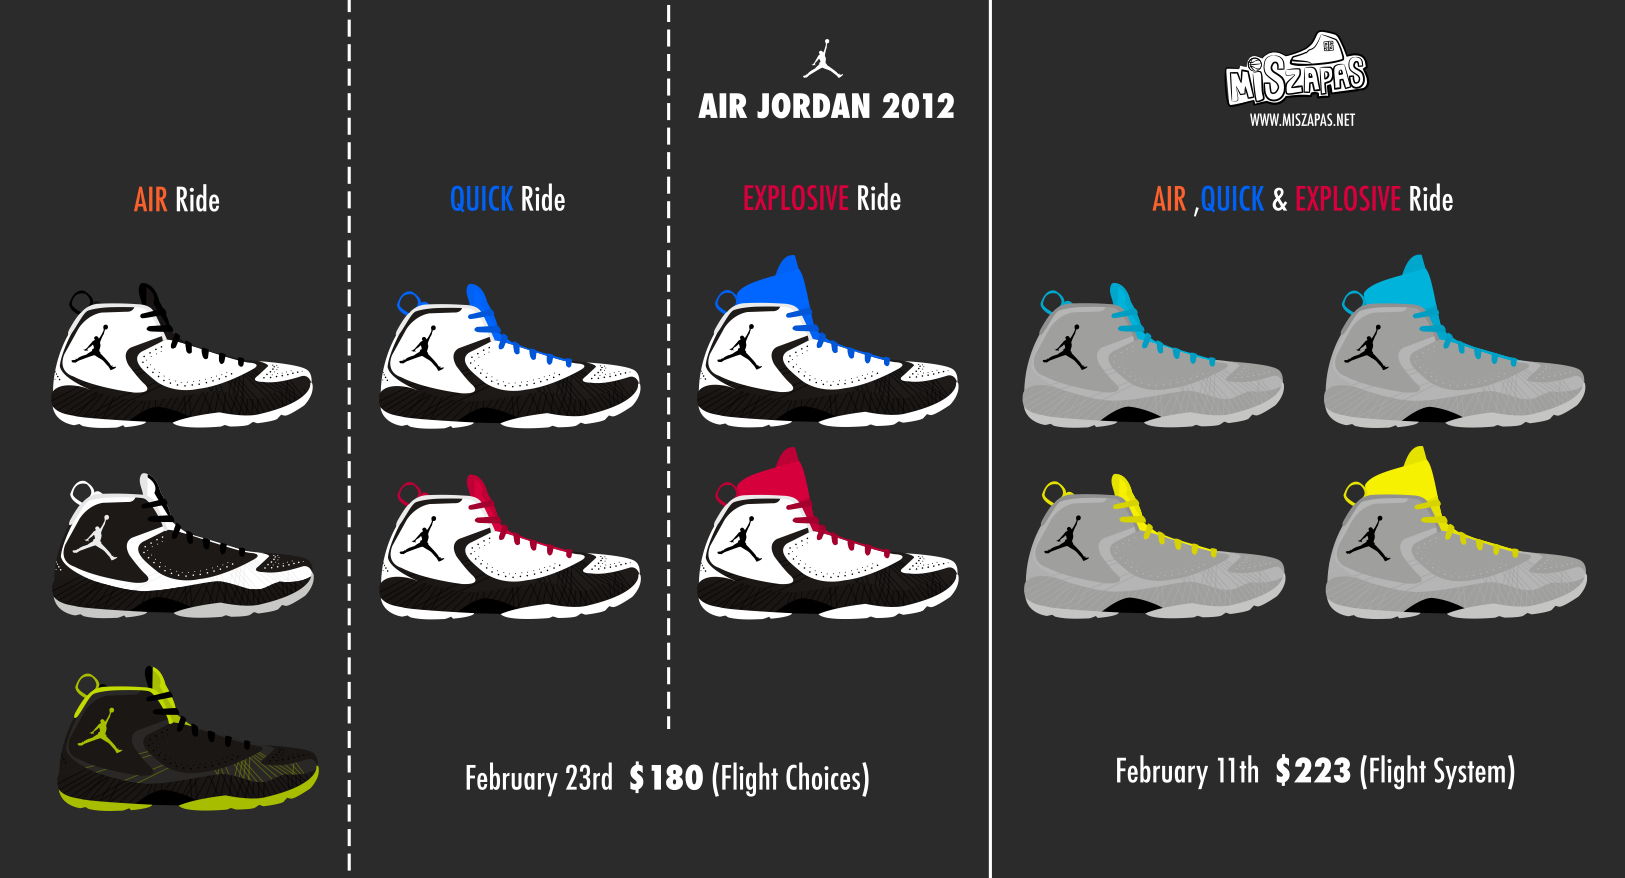 Air Jordan 2012 | Mis Zapas